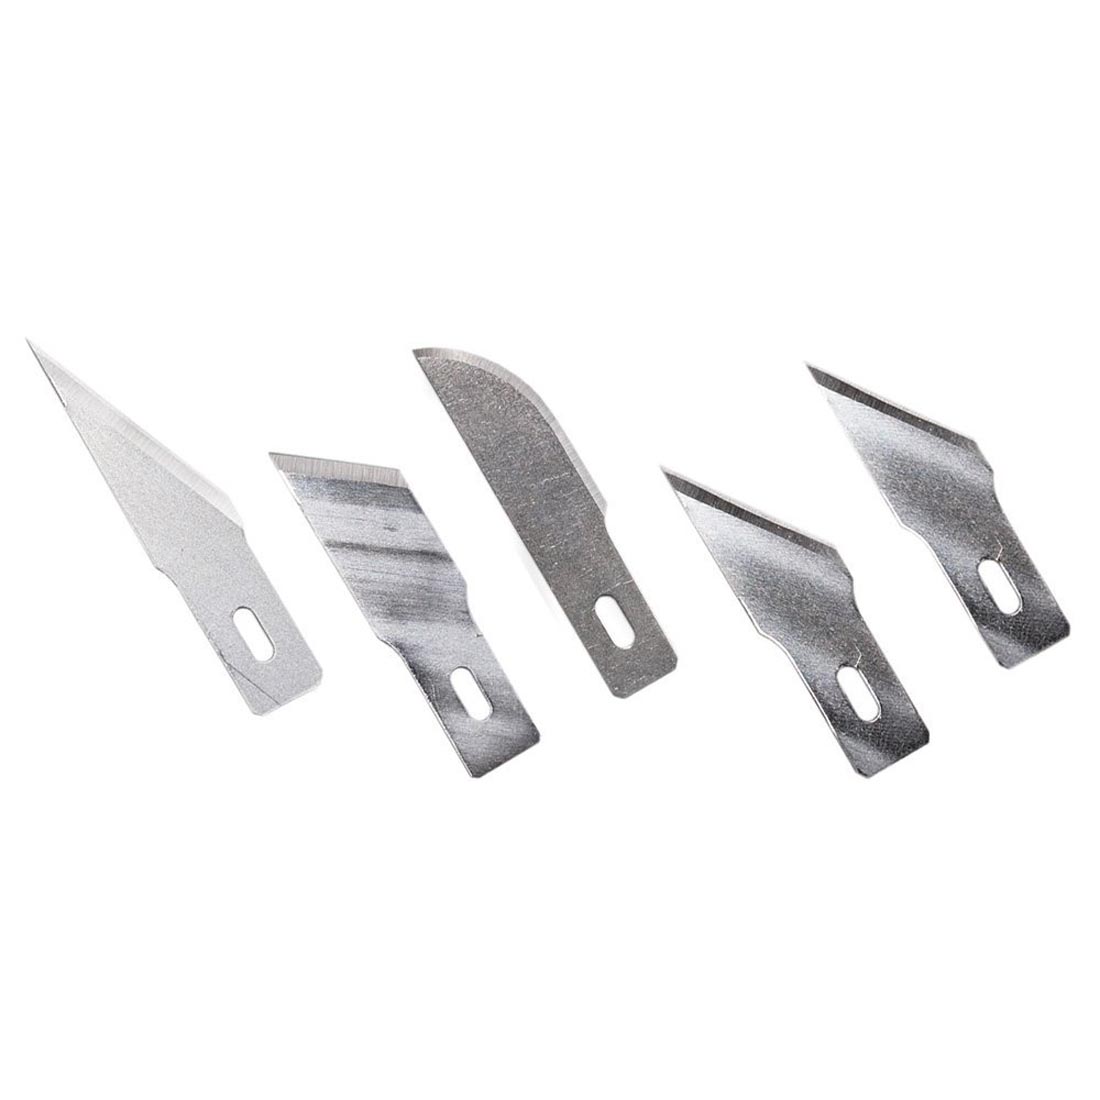 Excel #2 Knife Blade Assortment